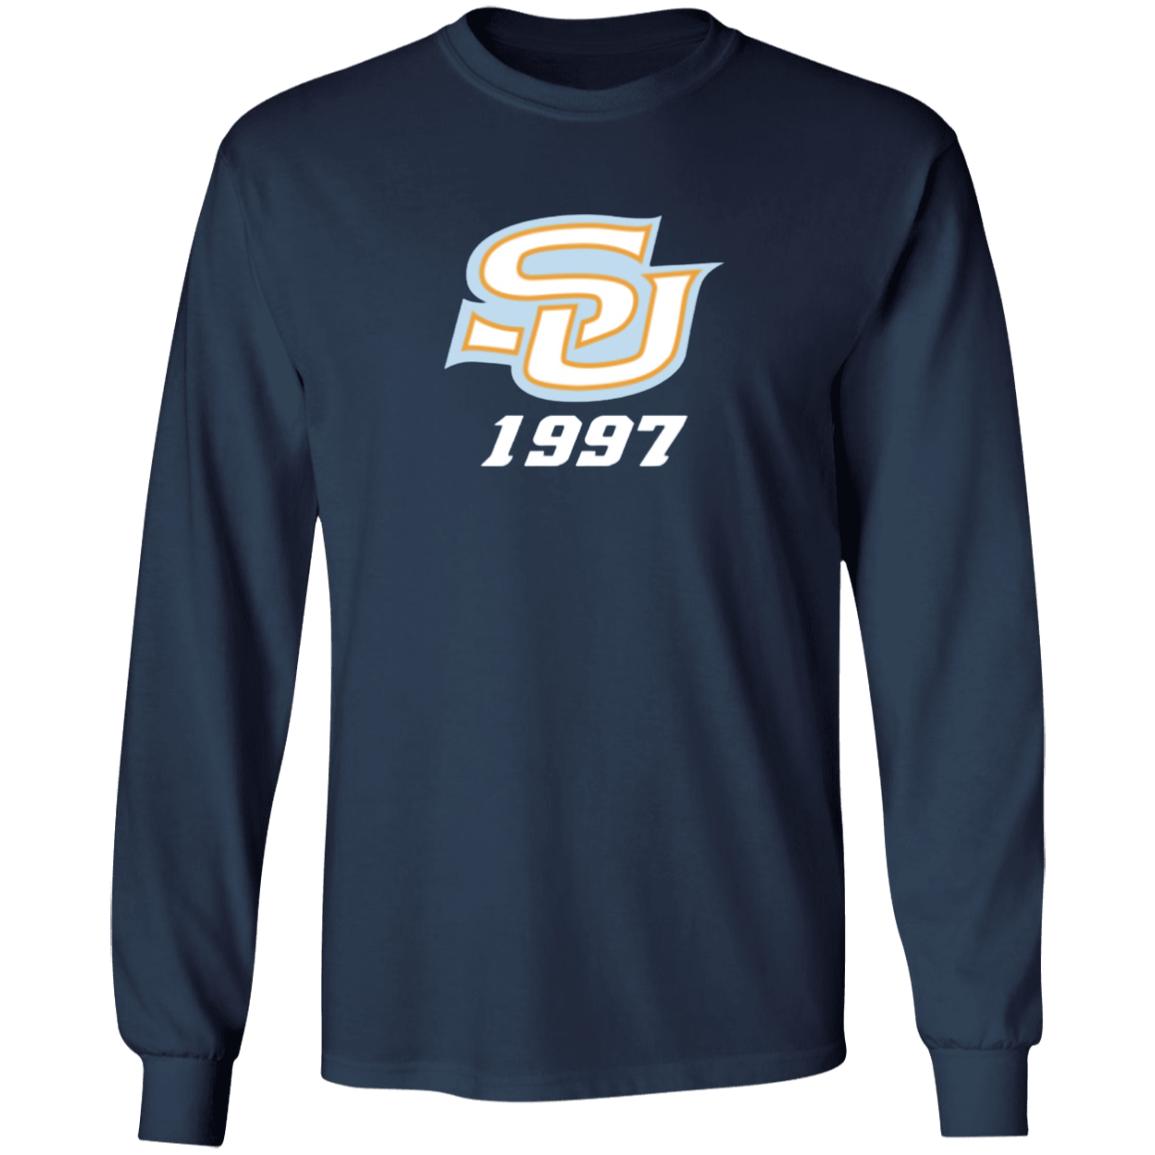 SU c/o 1997 G240 LS Ultra Cotton T-Shirt